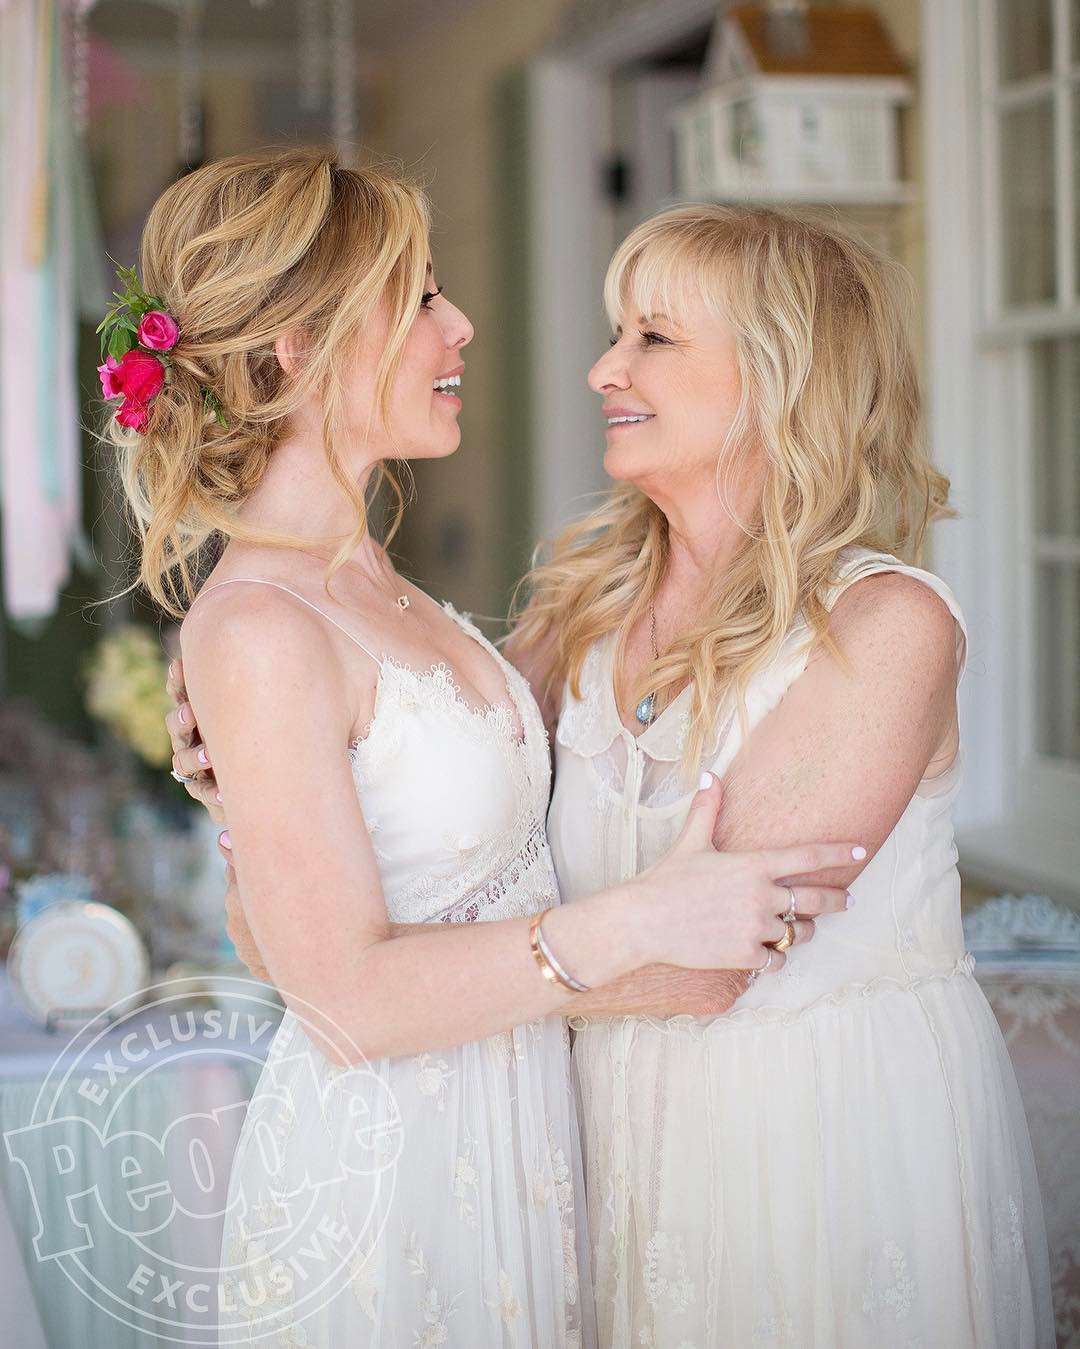 Tara Lipinski and Her Mom Patricia Lipinski at Her Bridal Shower